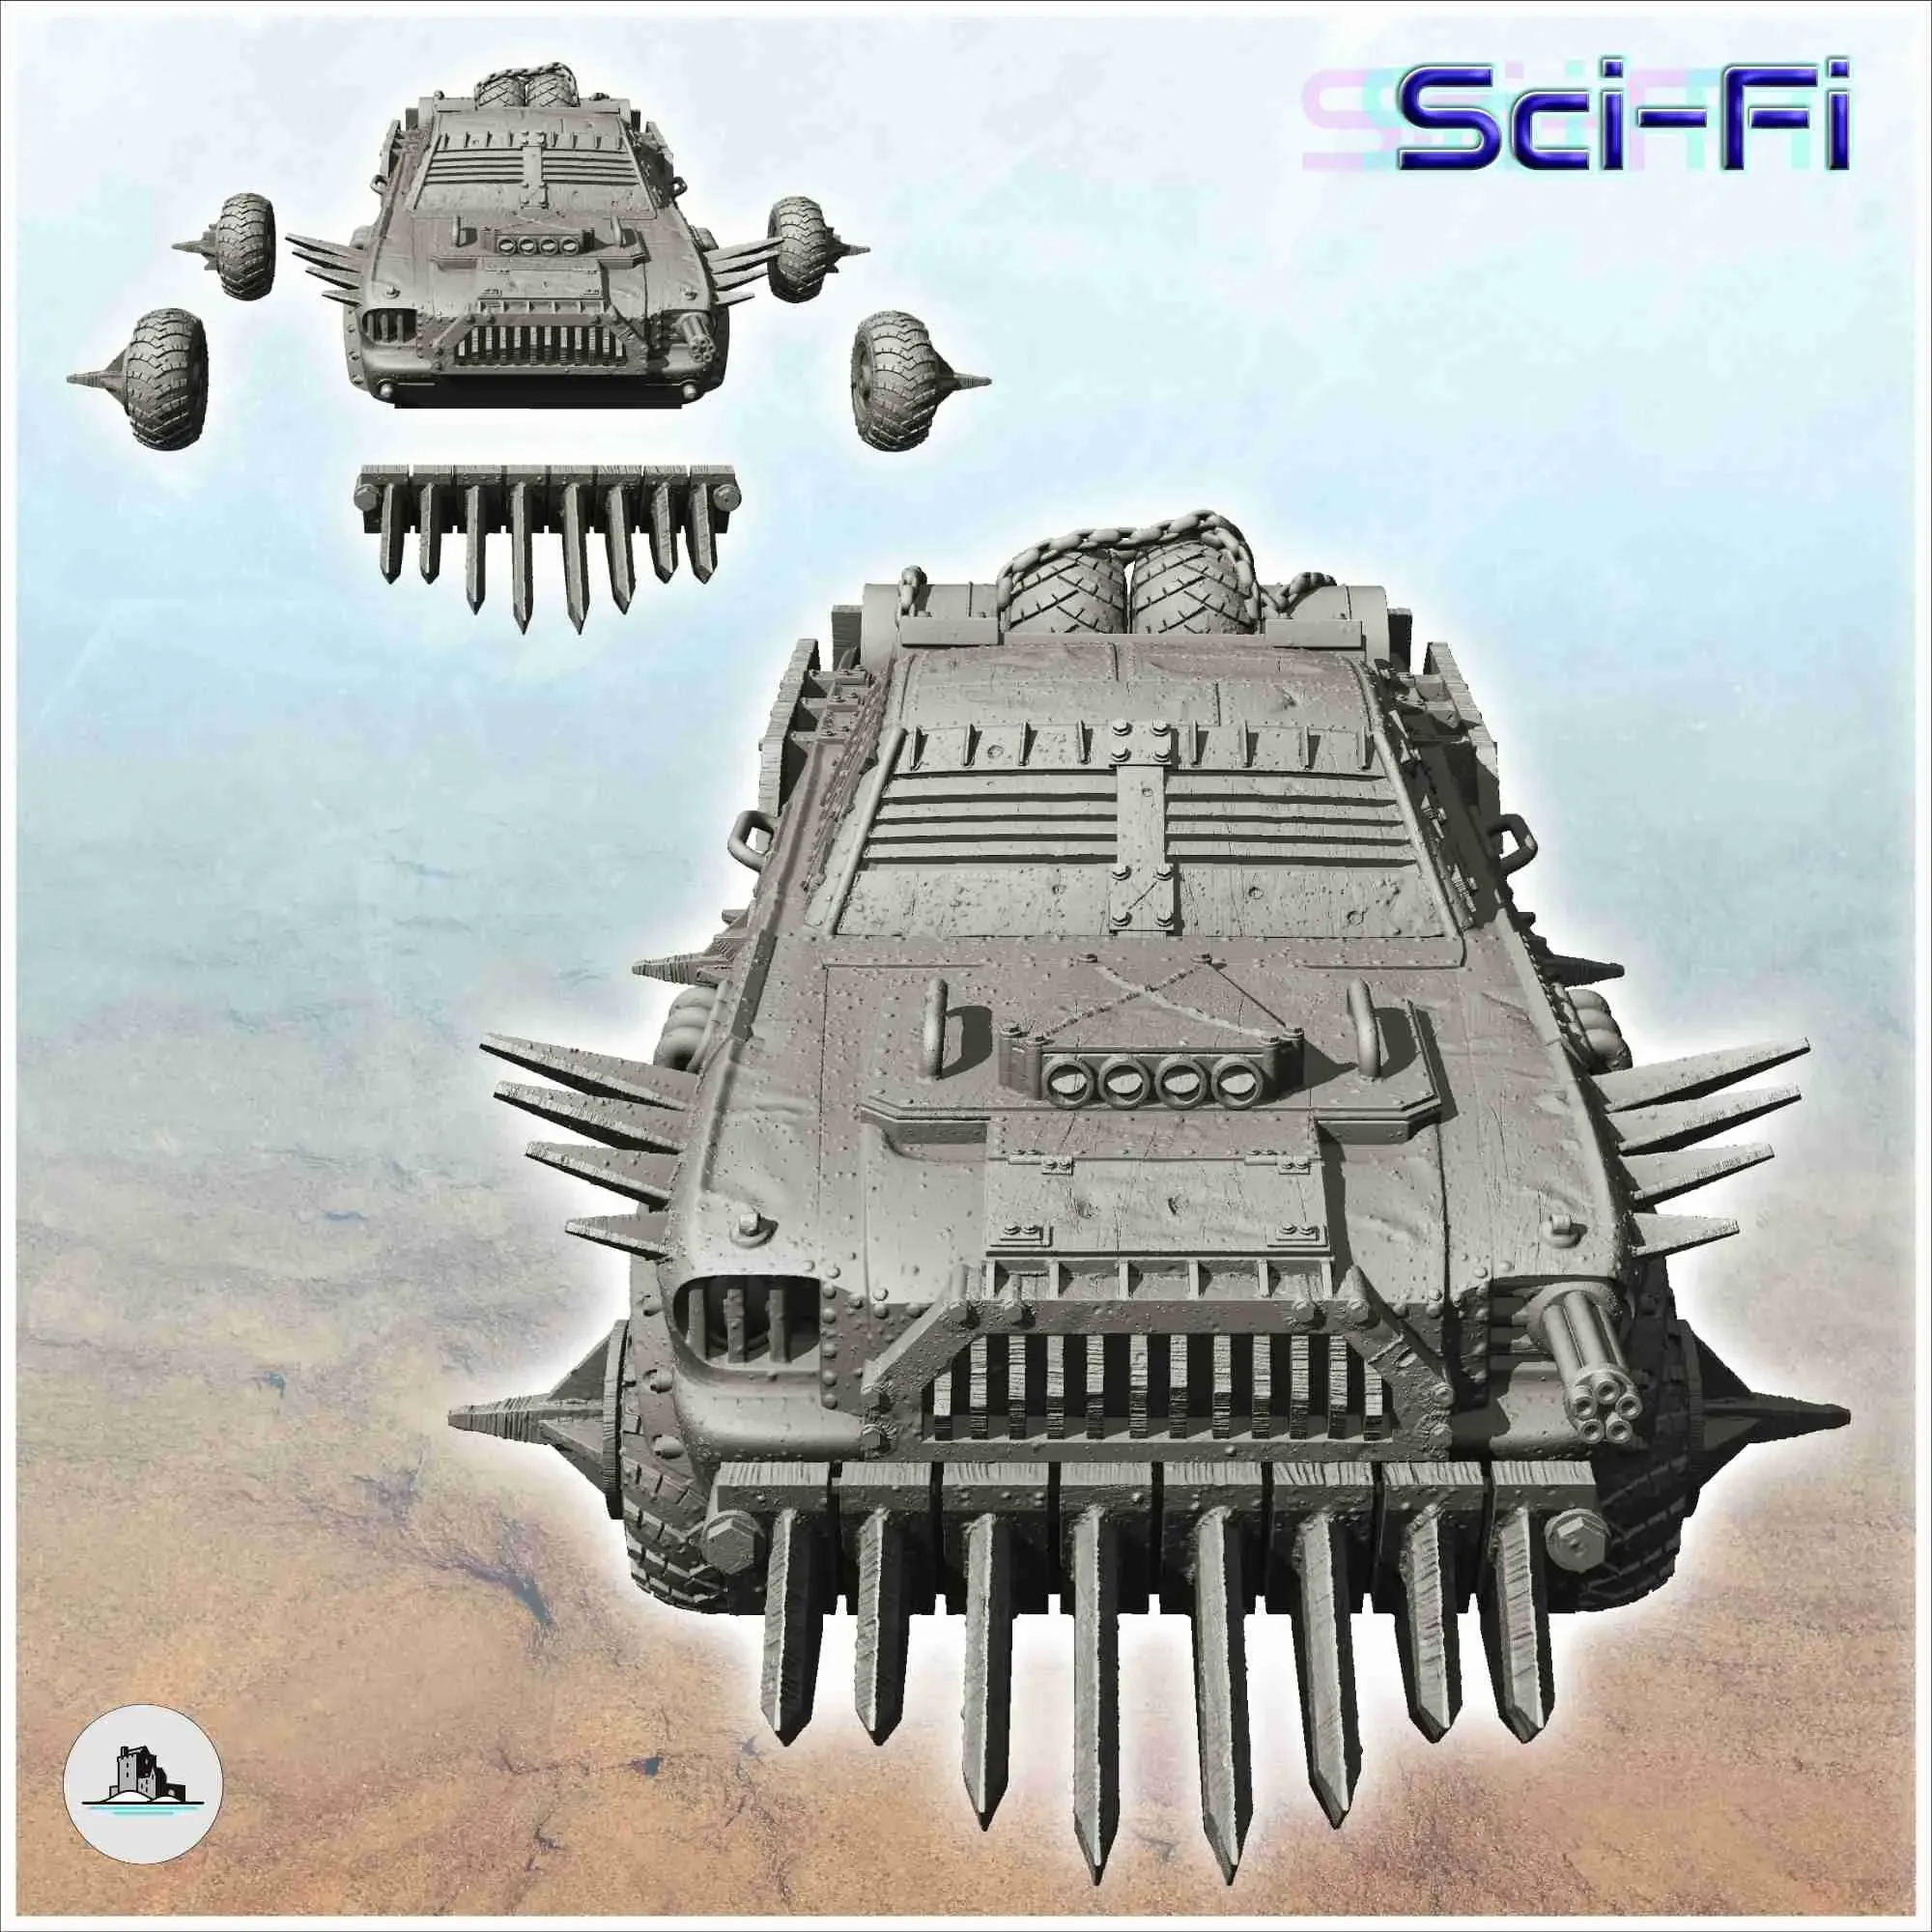 Post-apo car with spikes and machine gun (16) - sci-fi scien